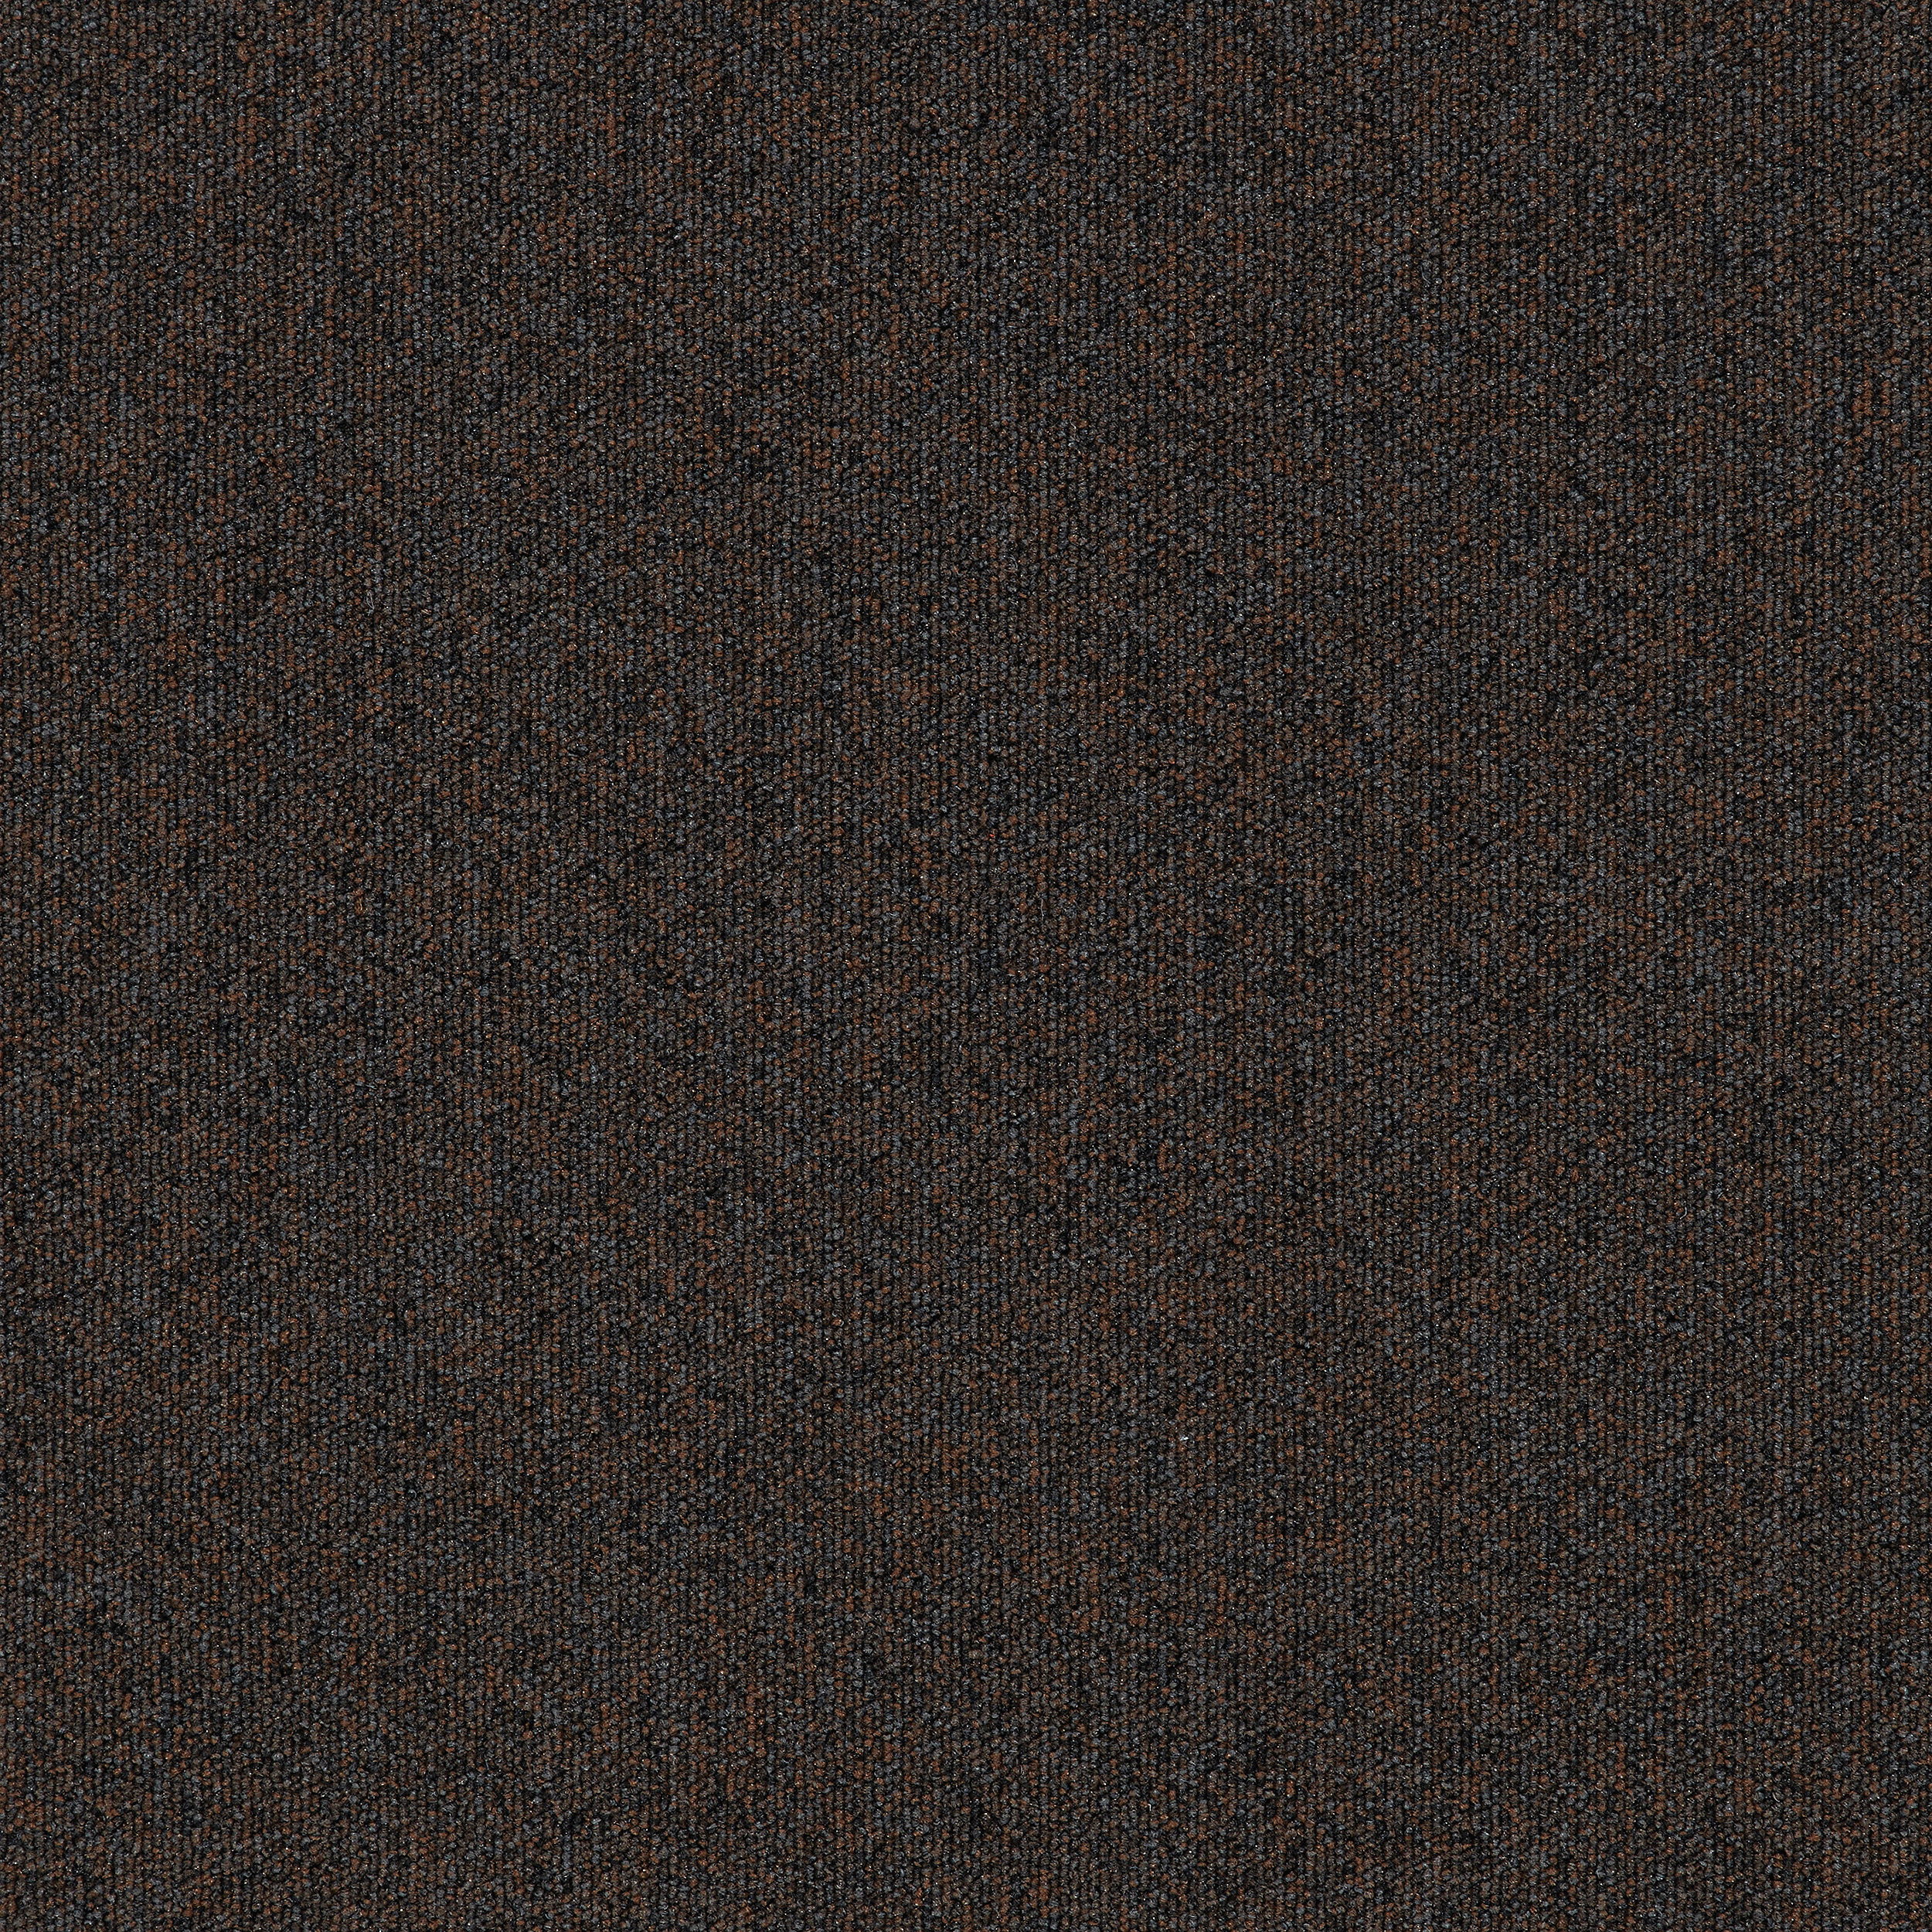 Heuga 727 Carpet Tile In Chocolate image number 19